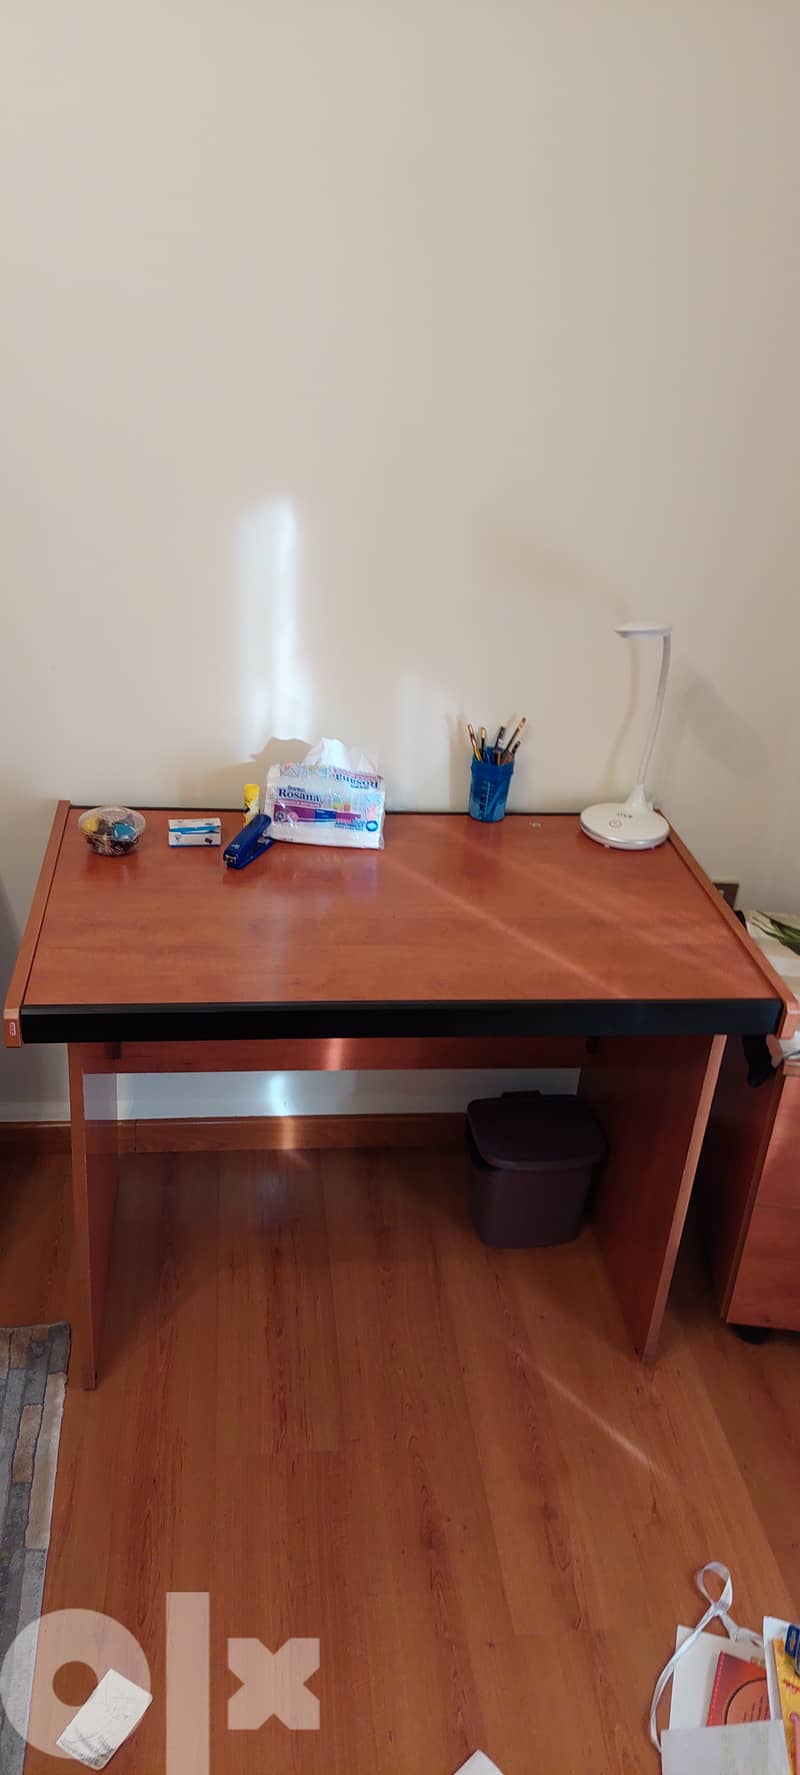 Study desk with chest of drawers مكتب للدراسة مع خزانة جوارير 2